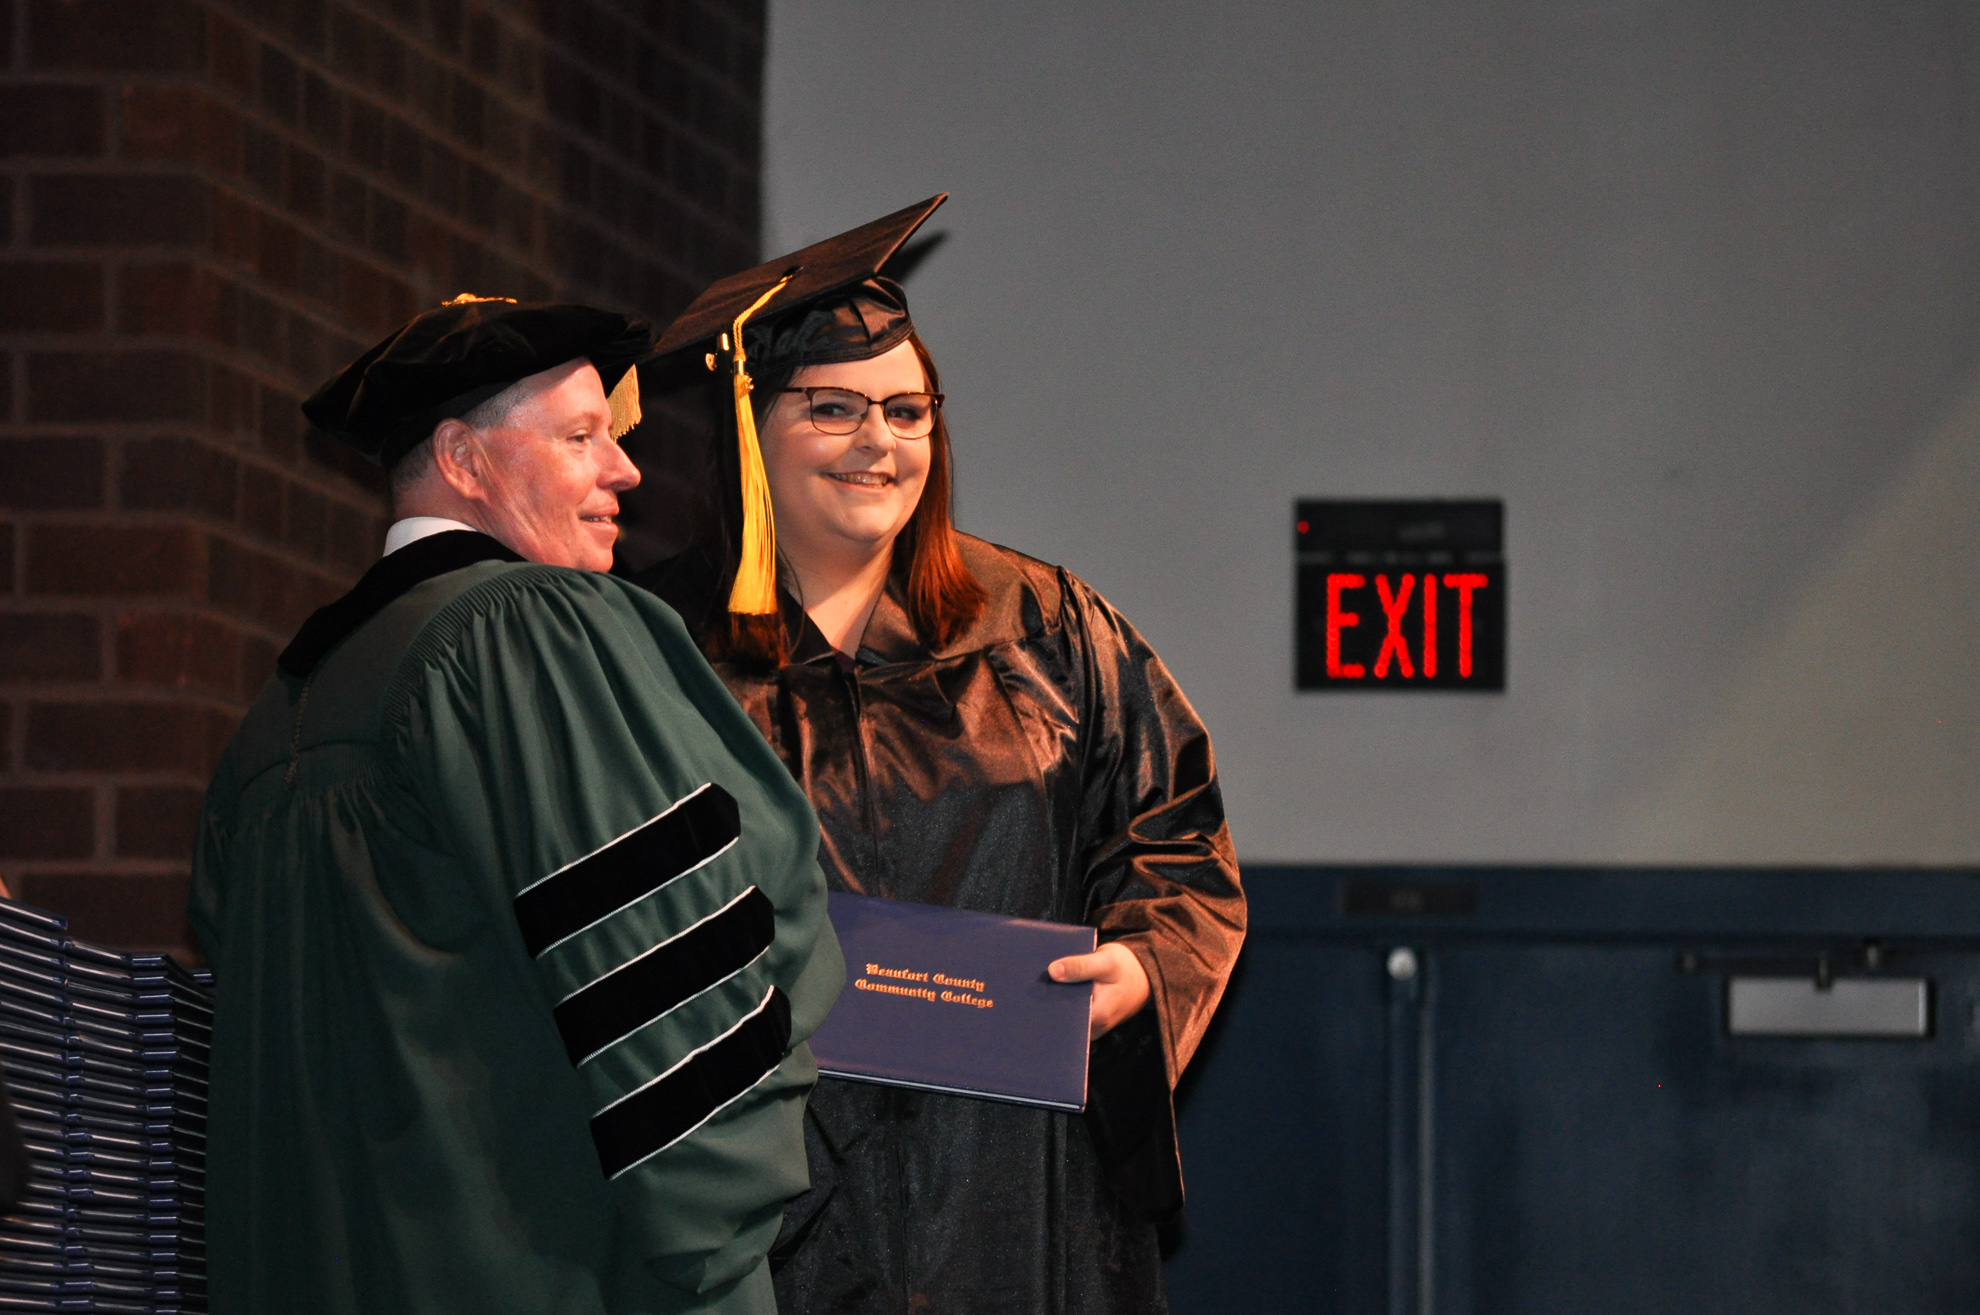 A person receives a diploma at graduation.